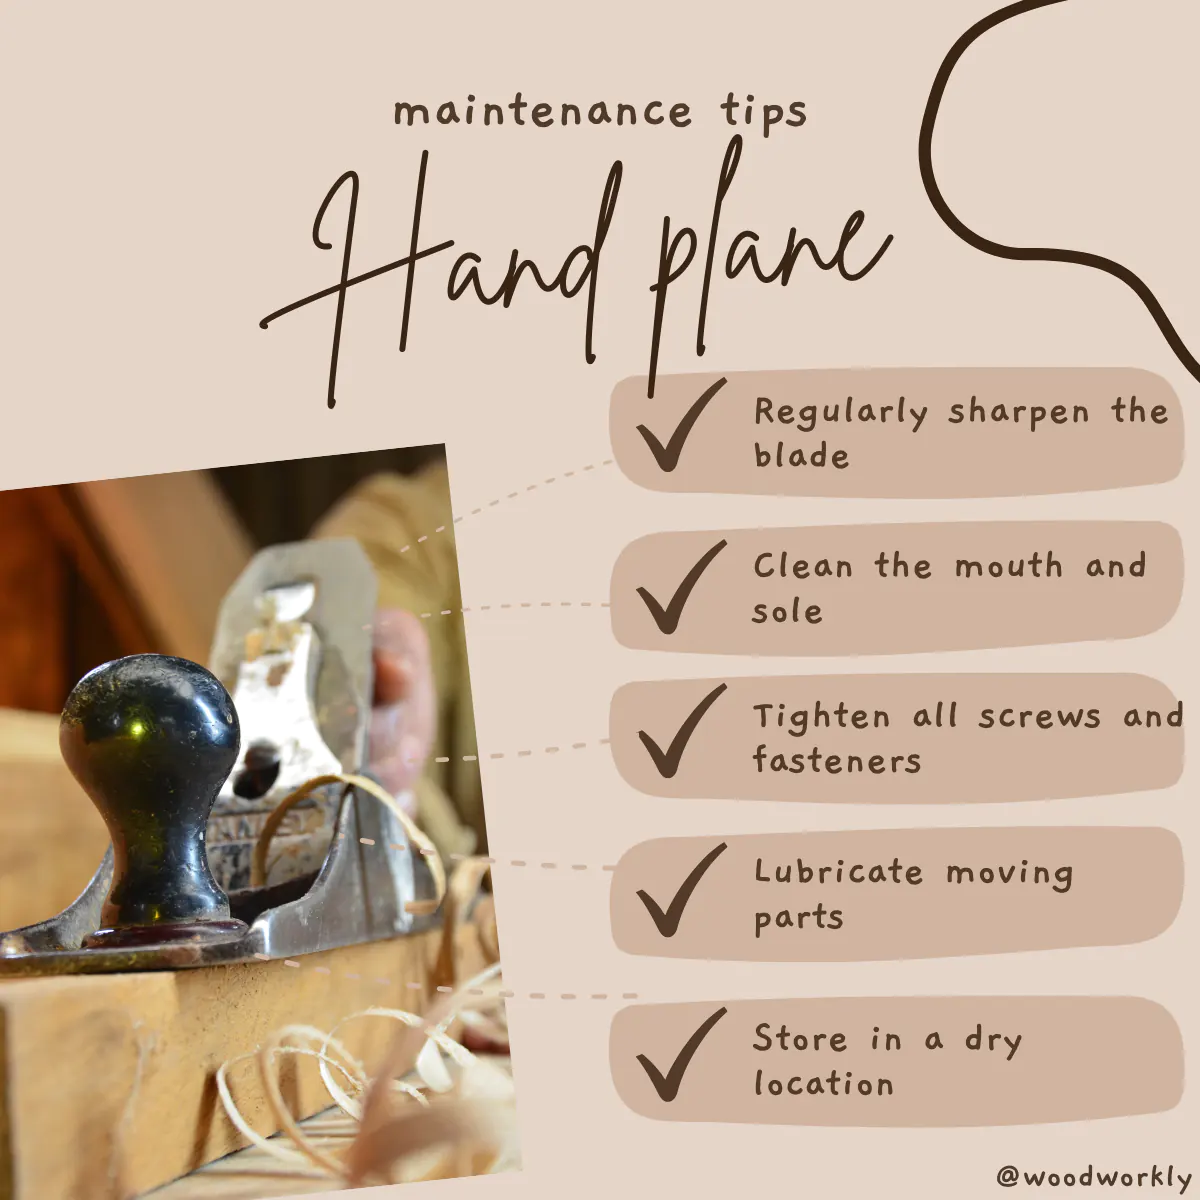 Hand plane maintenance tips